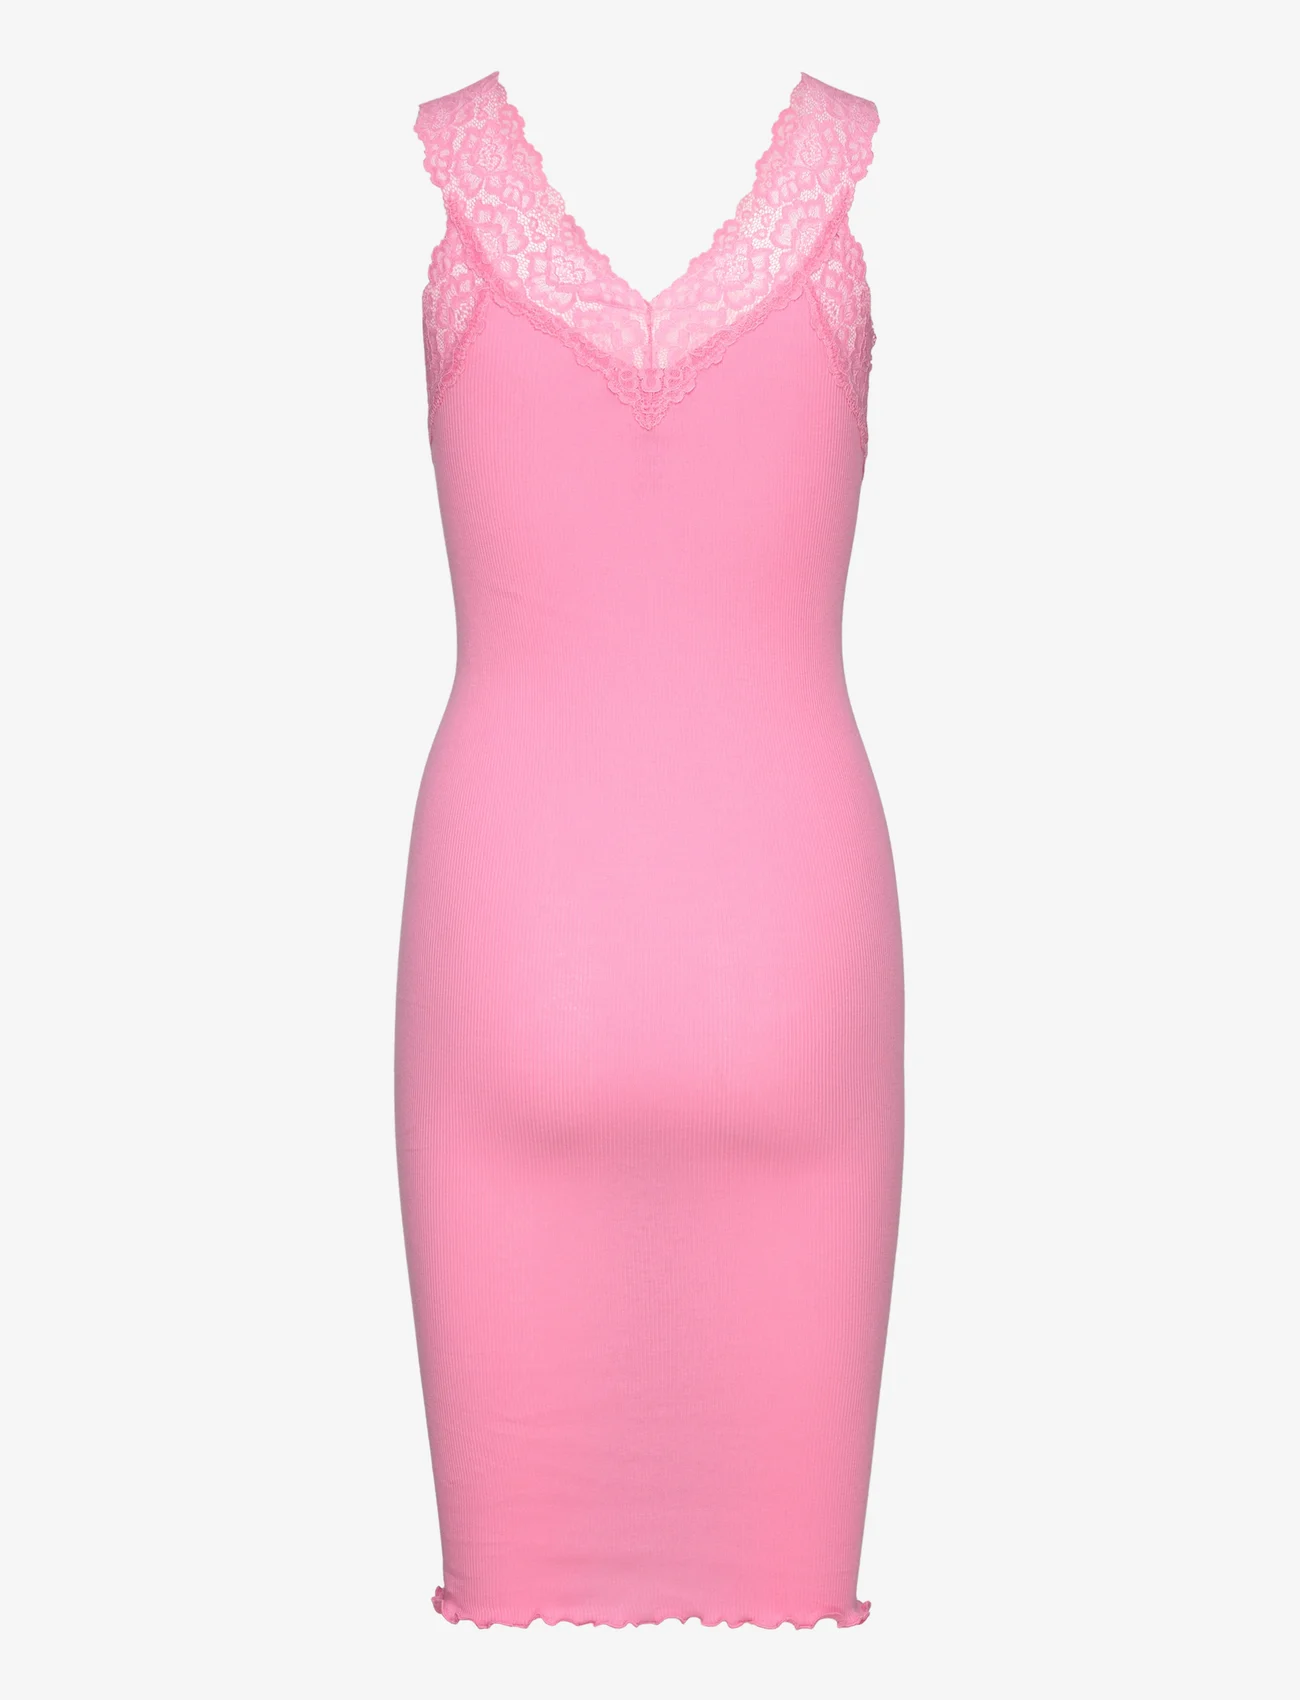 Rosemunde - Organic dress - etuikleider - bubblegum pink - 1